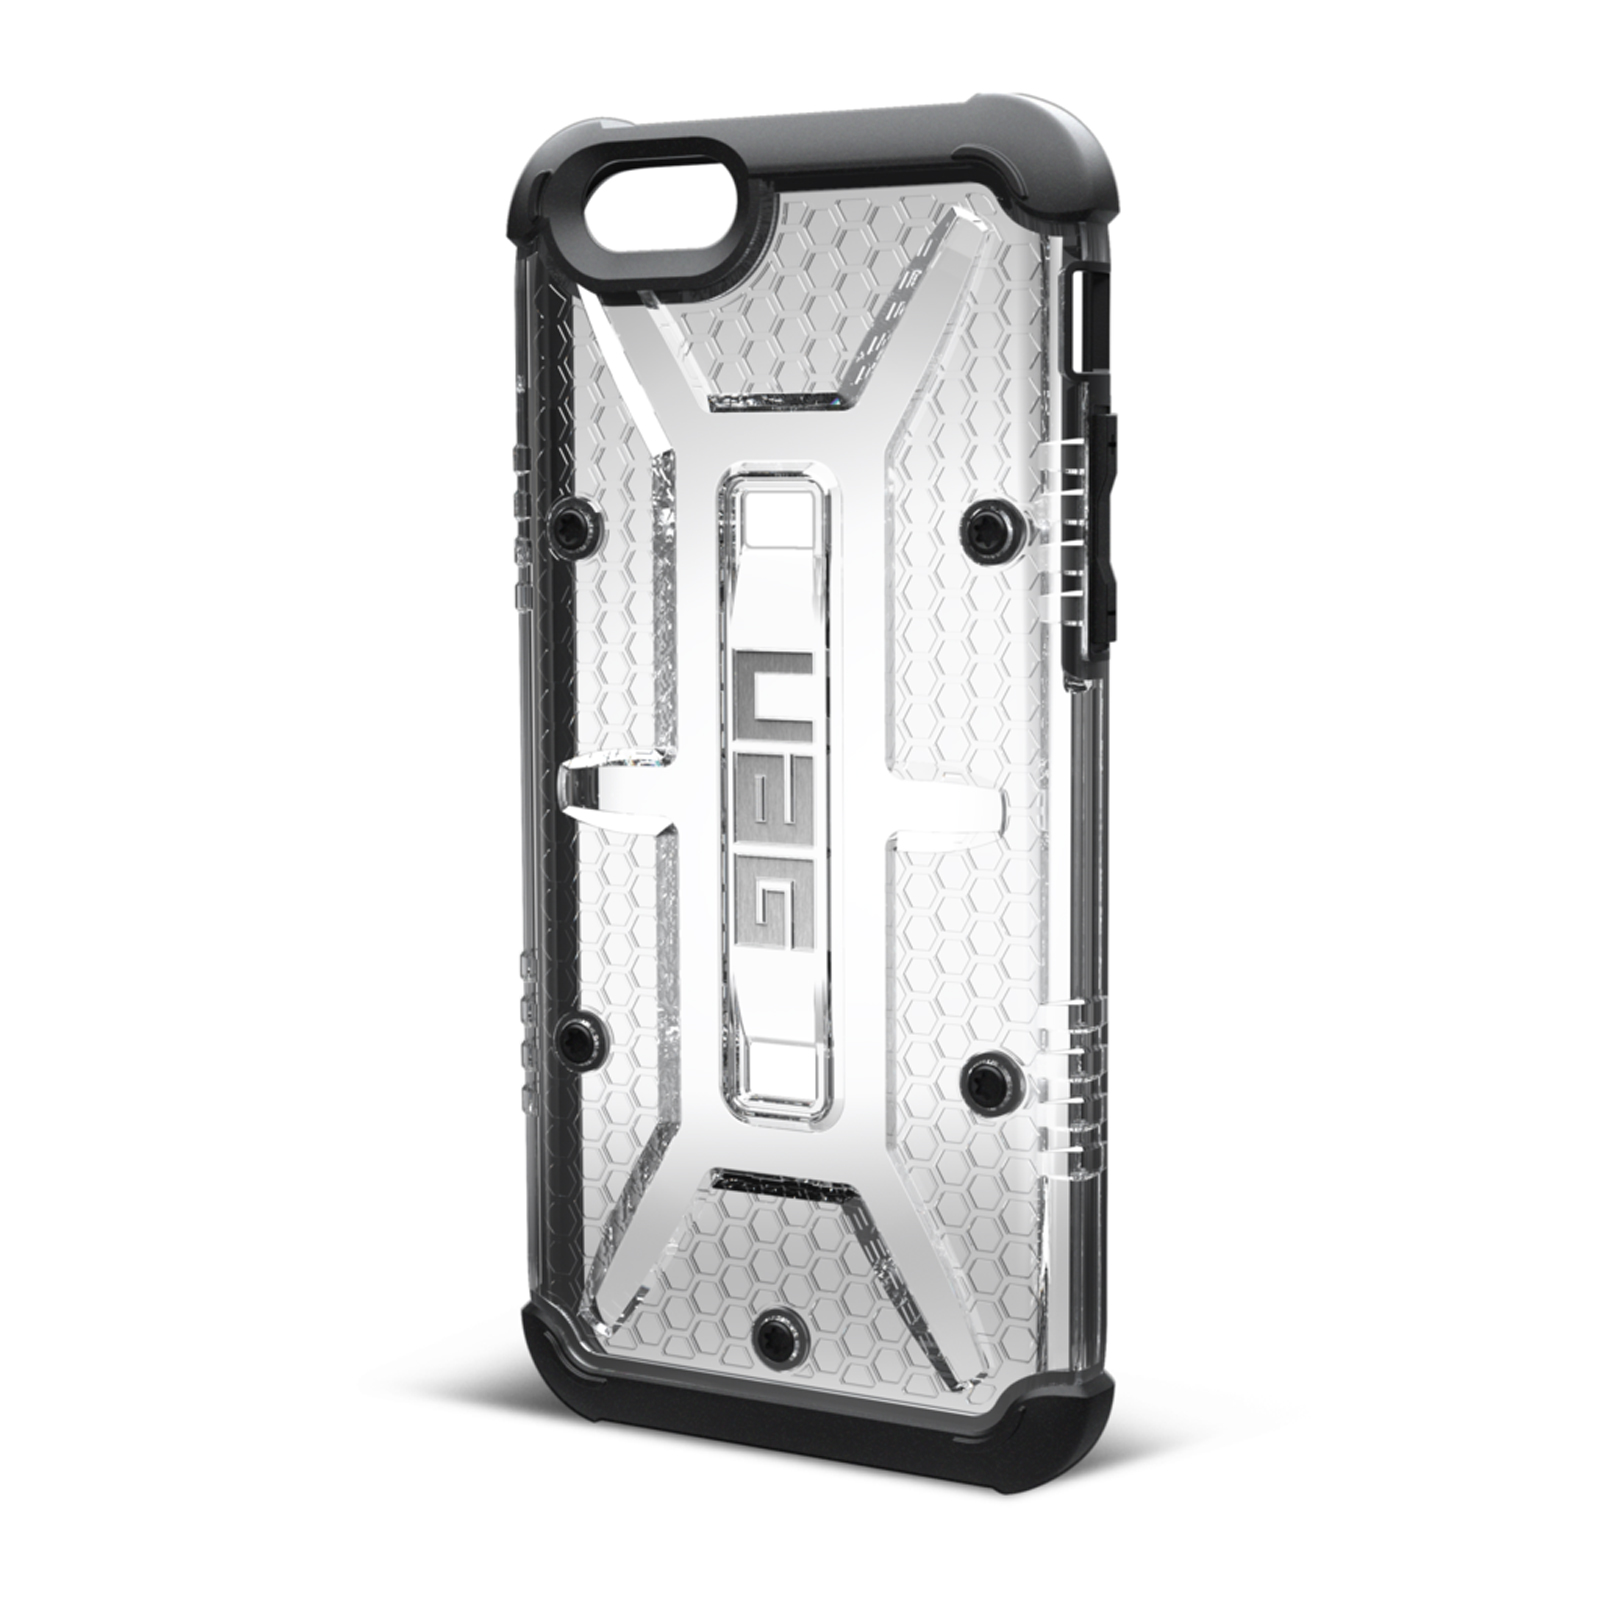 UAG iPhone 6 and 6s Composite Case - Maverick - Ice/Black